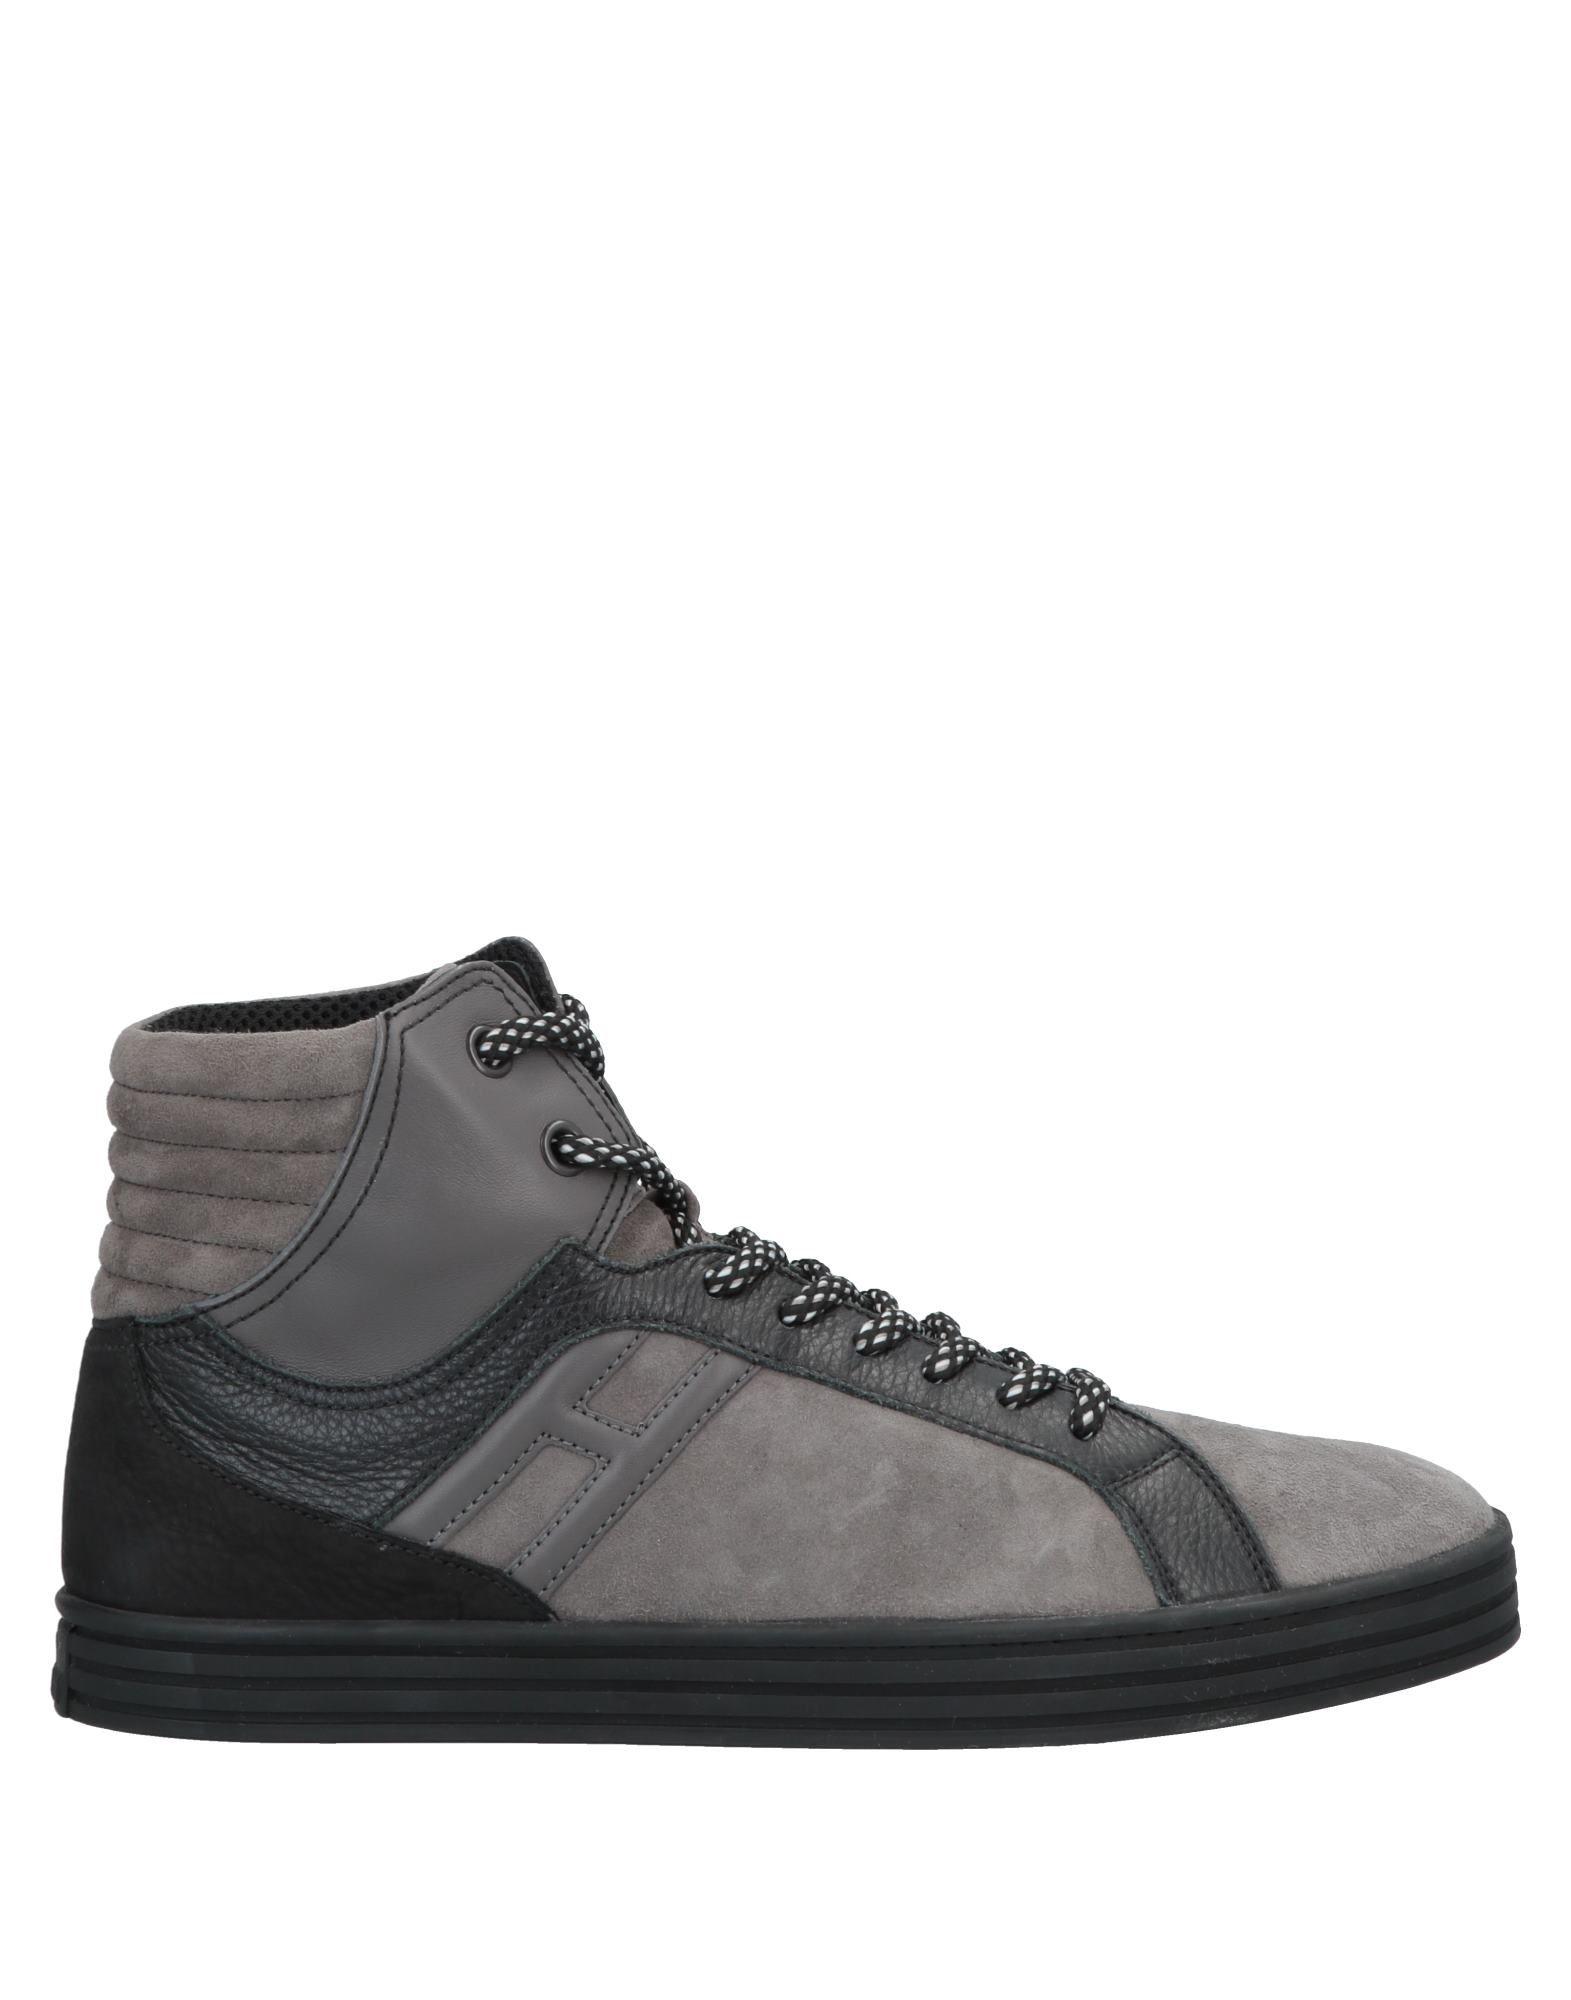 Hogan Rebel High-tops & Sneakers in Grey (Gray) for Men - Lyst